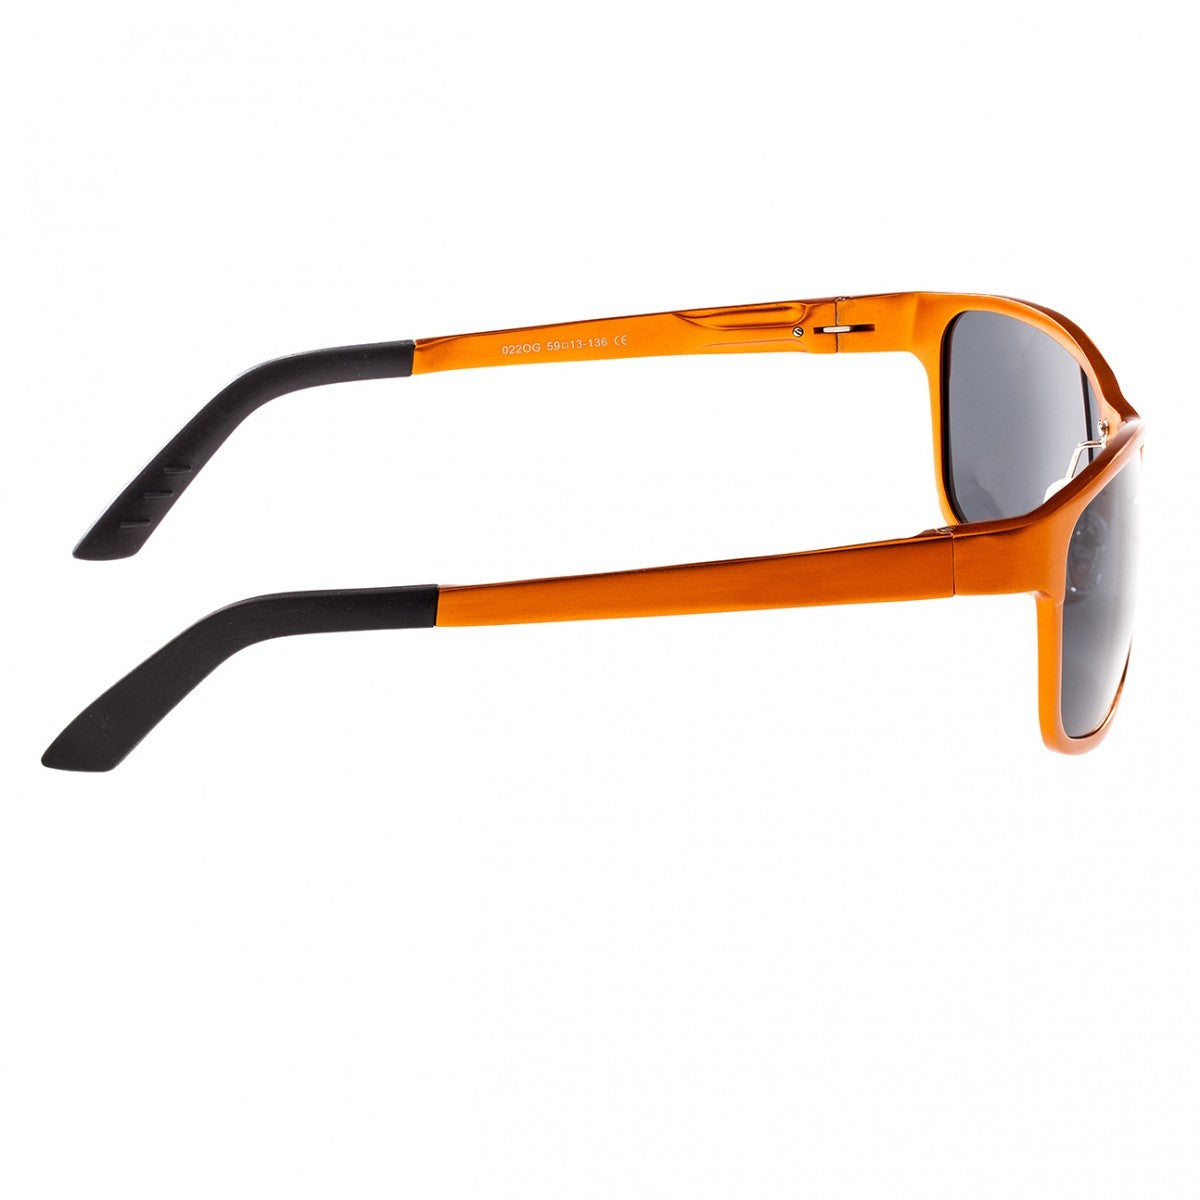 Breed Hydra Aluminium Polarized Sunglasses - Orange/Black - BSG022OG